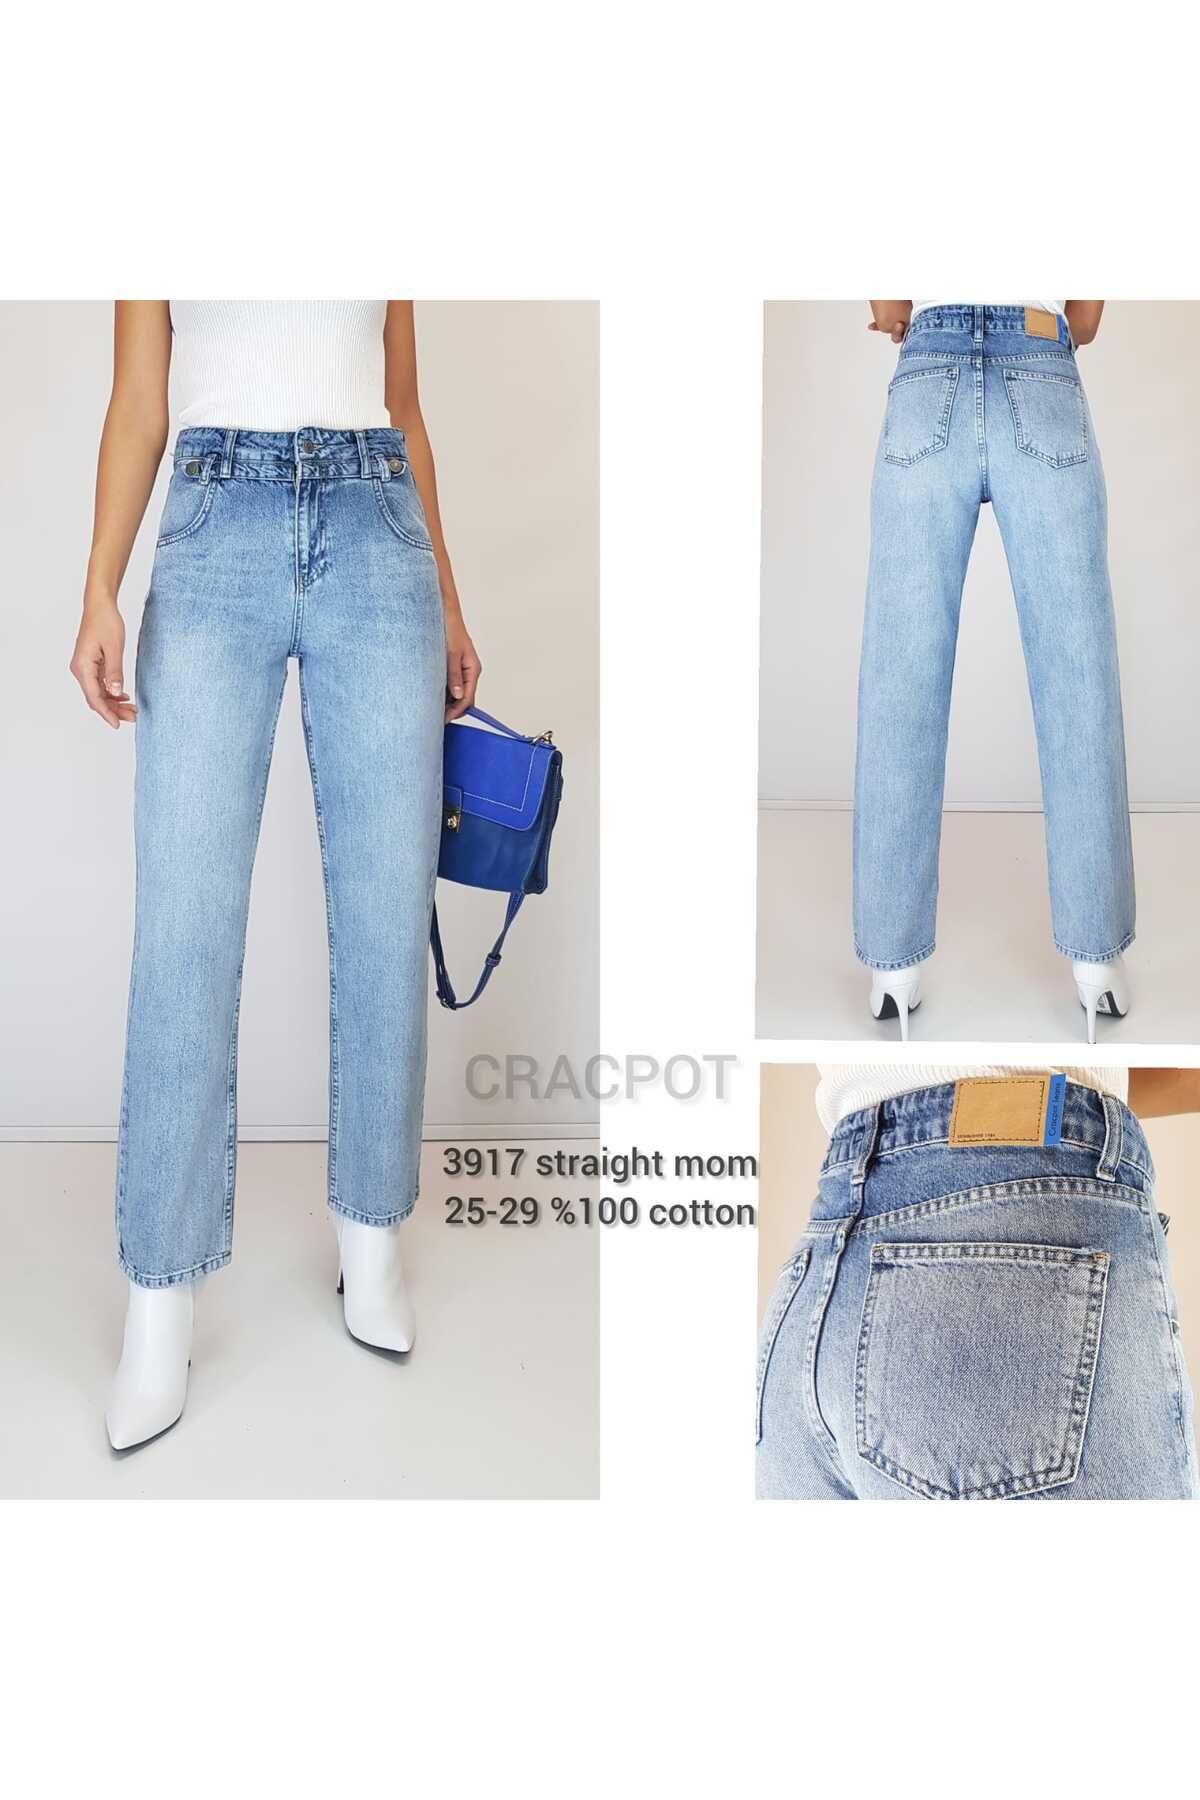 cracpot COTTON Straight Mom Jeans